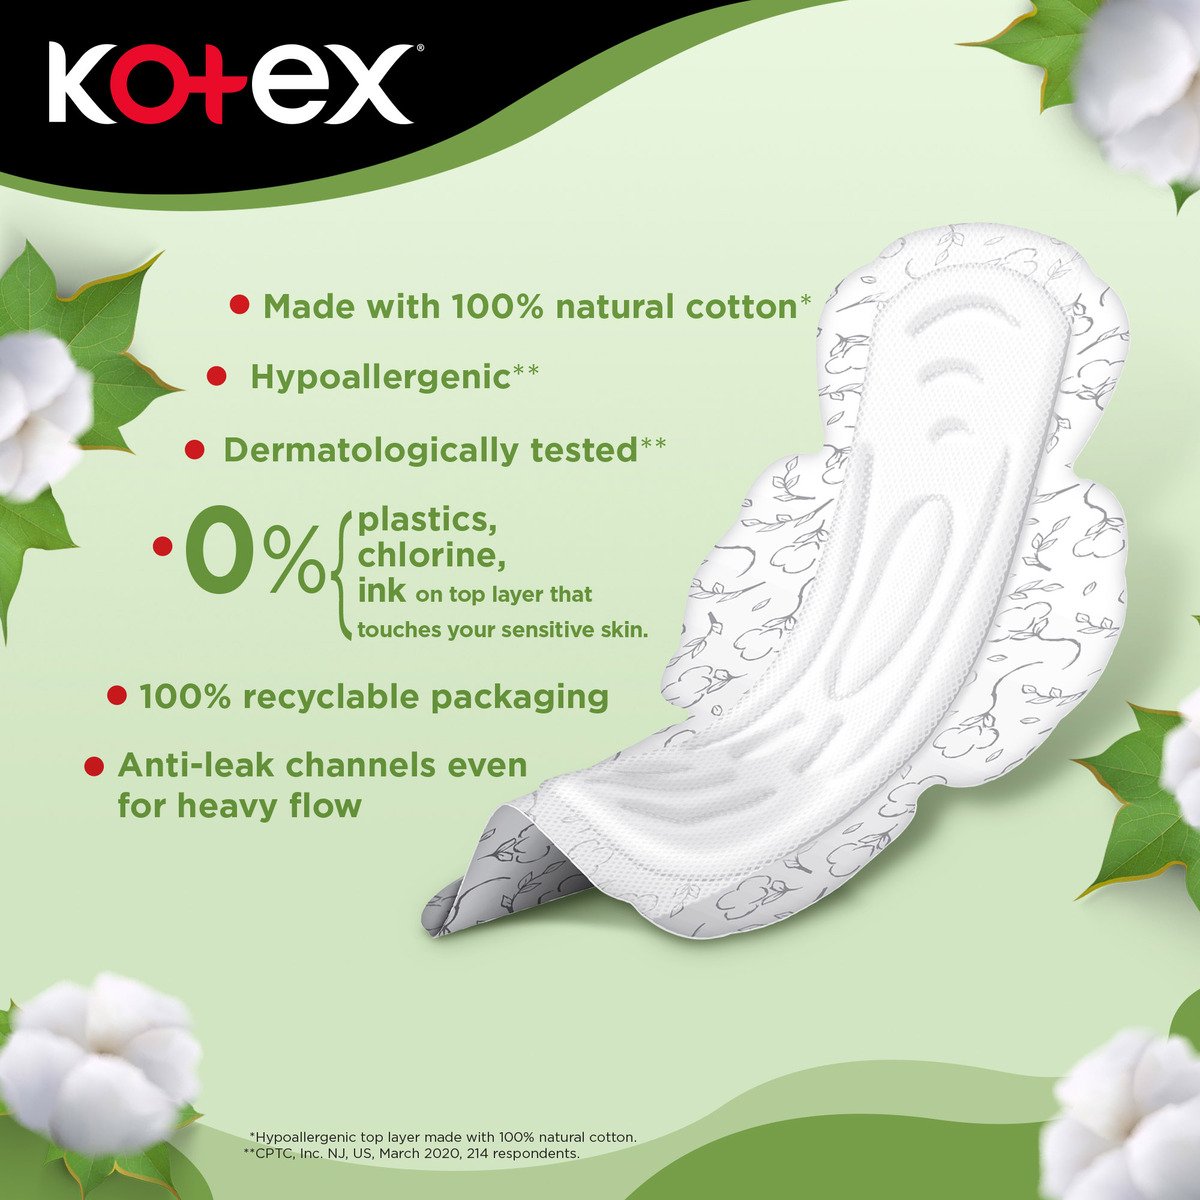 Kotex Natural Cotton Maxi Thick Super with Wings 44pcs